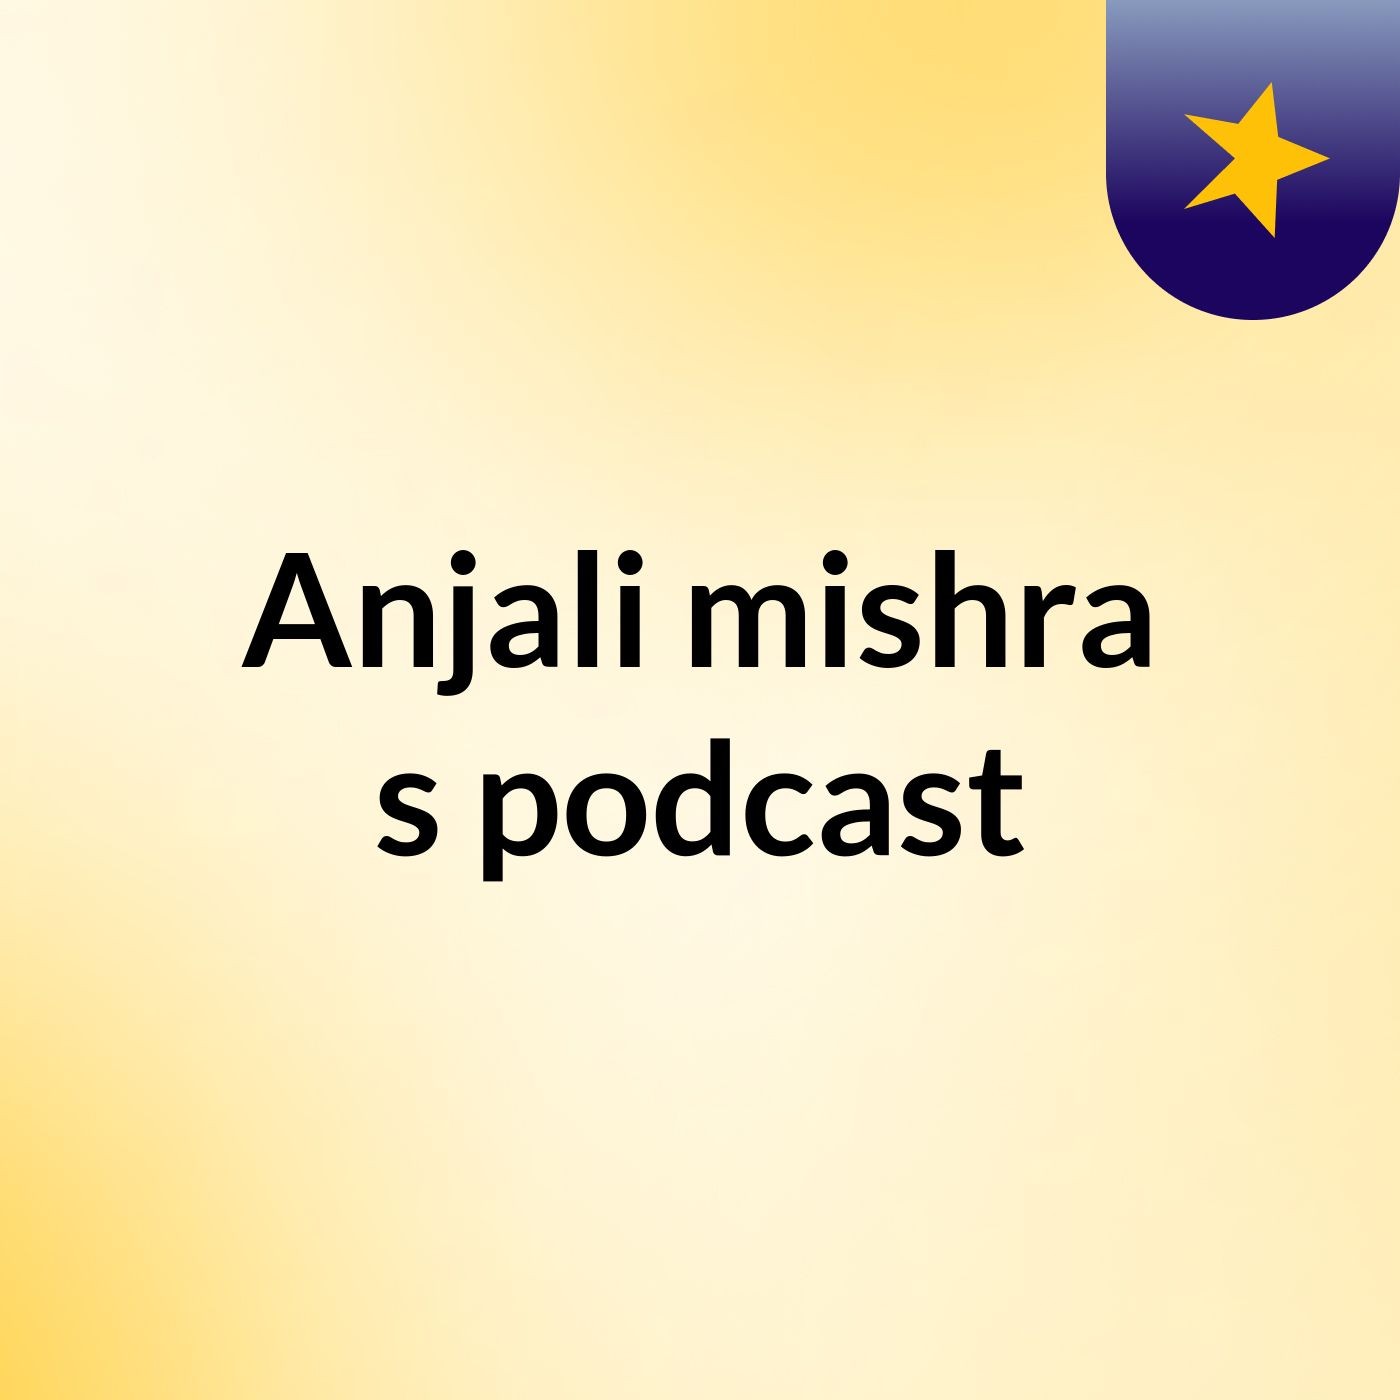 Anjali mishra's podcast